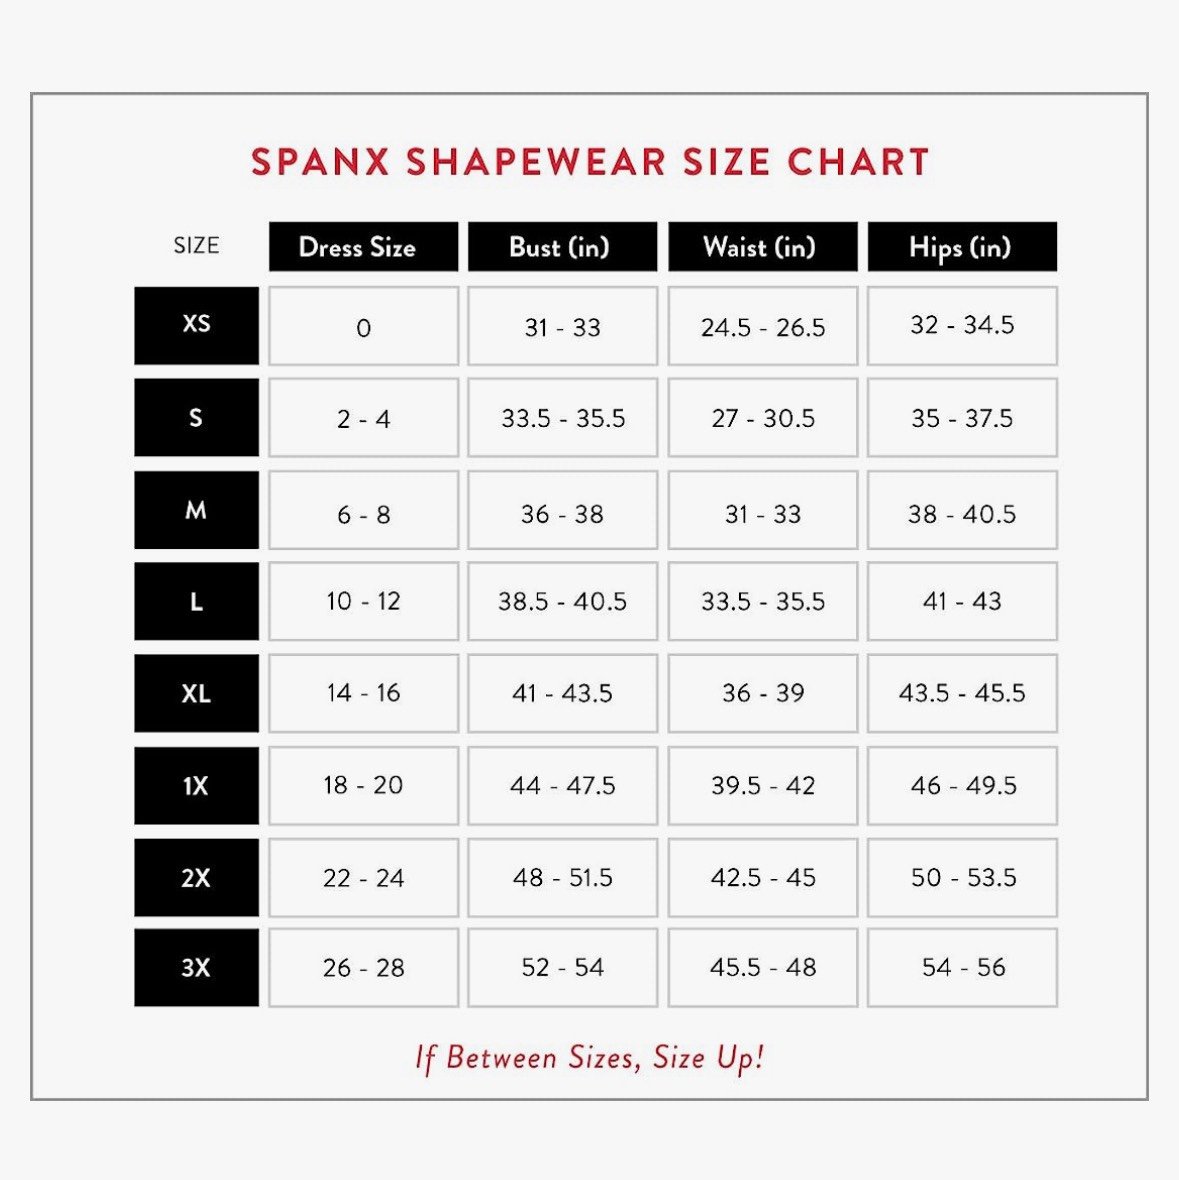 reasonable price SPANX Smart Grip Shapewear Slip, Retail $68, New nMvlgoDQK no tax